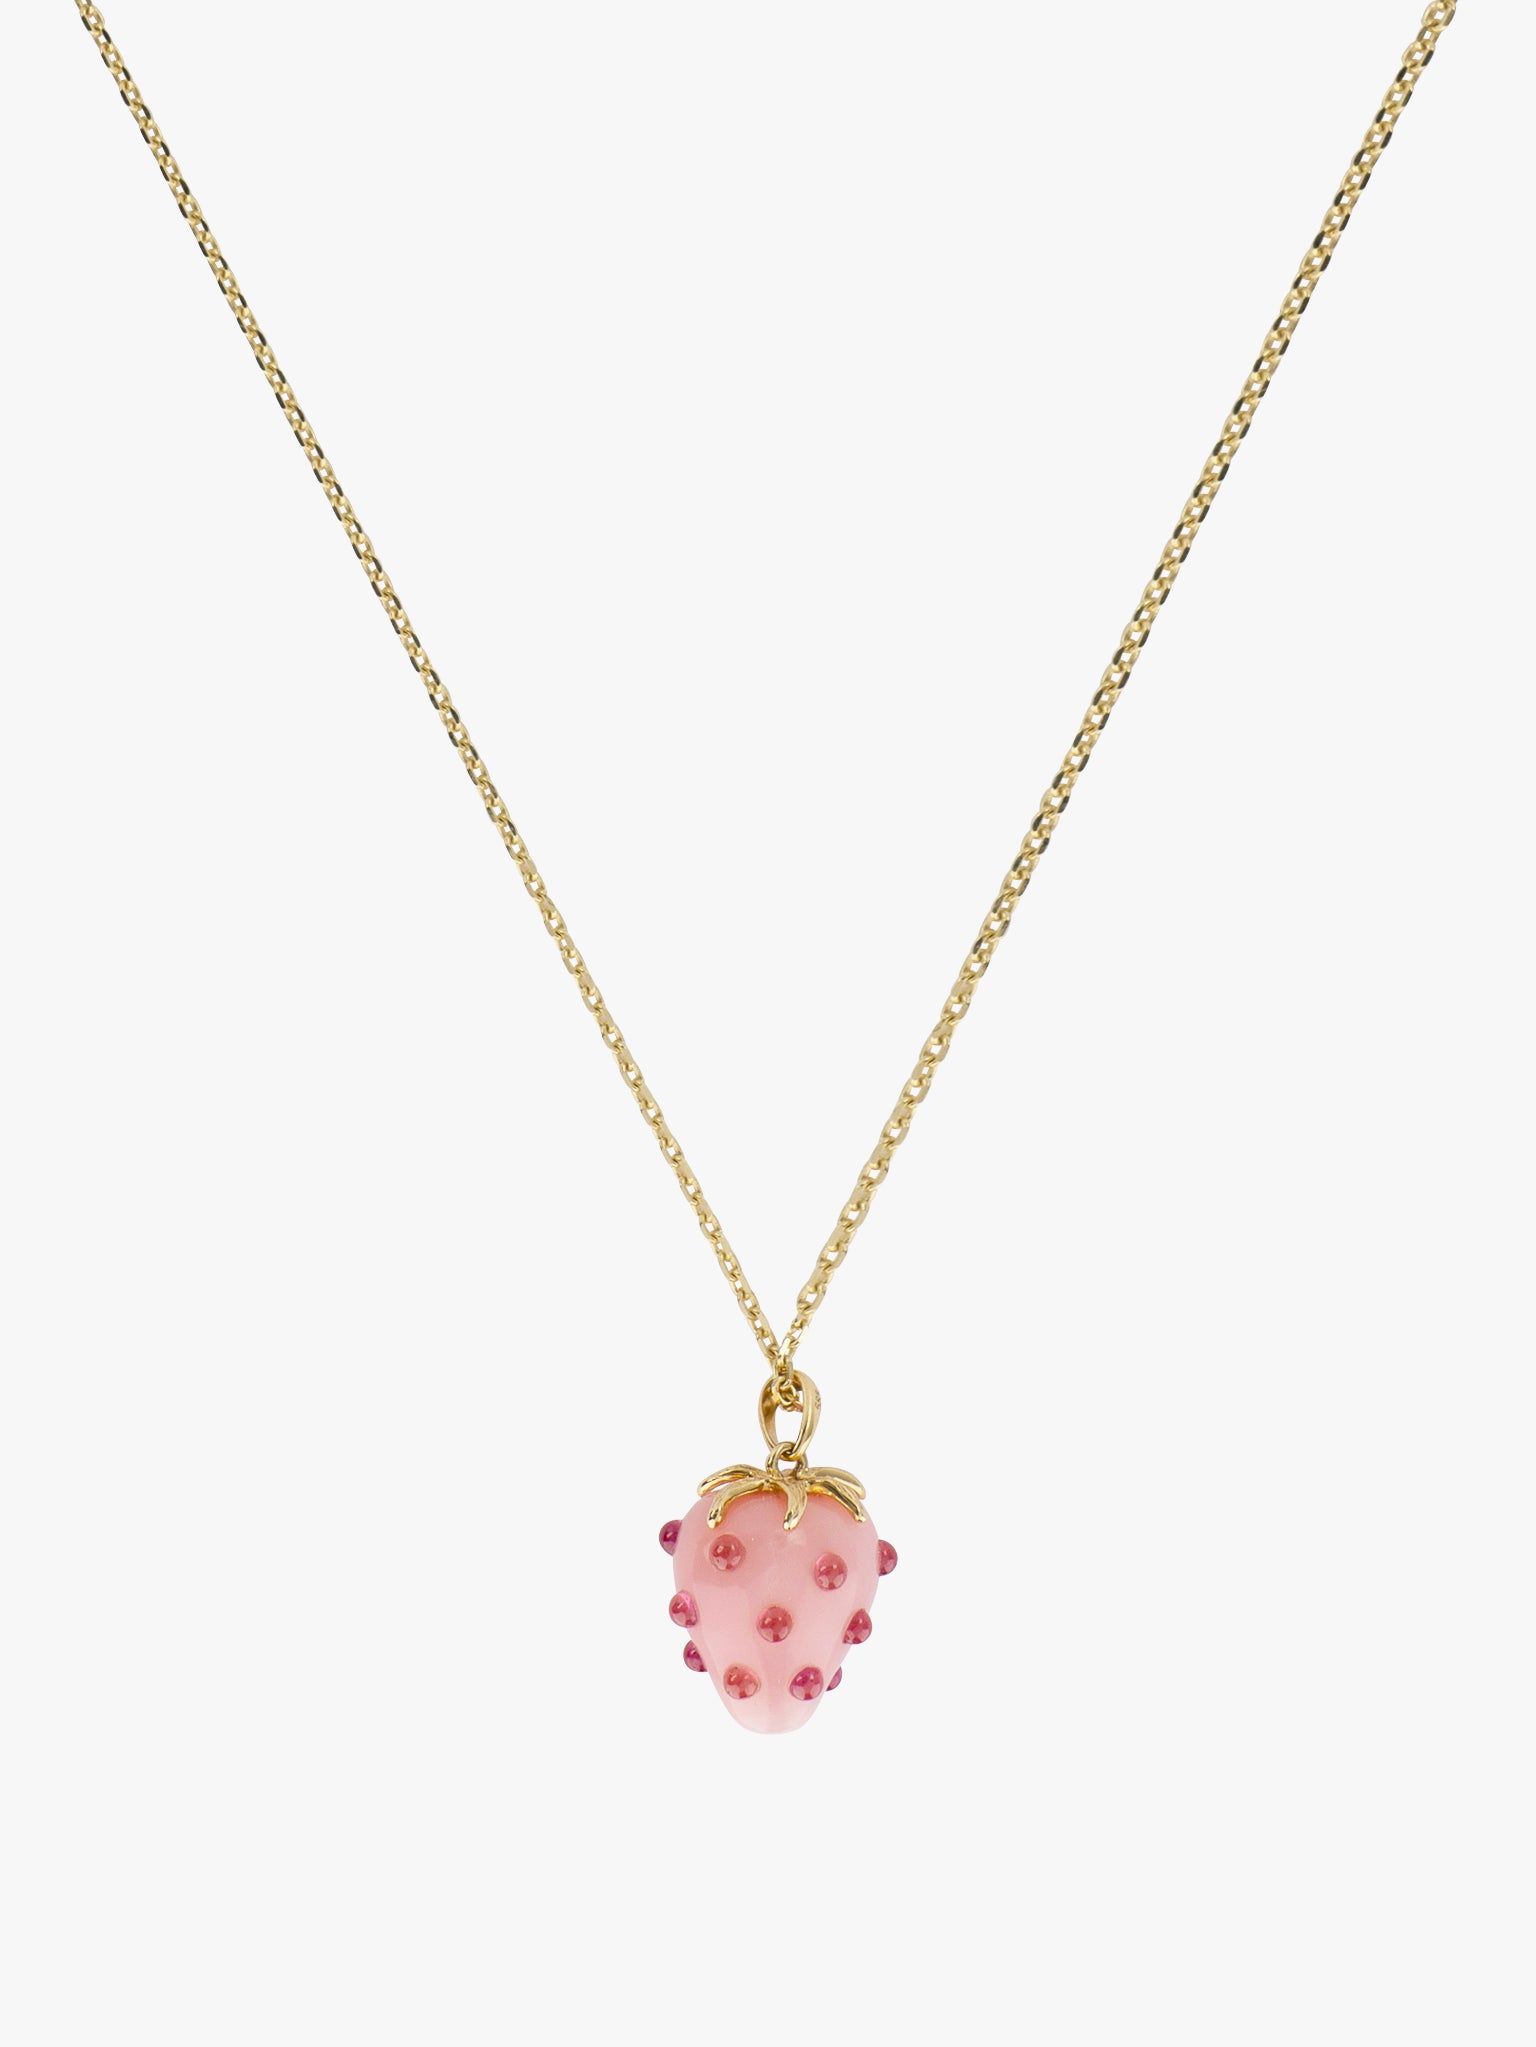 Strawberry opal pendant